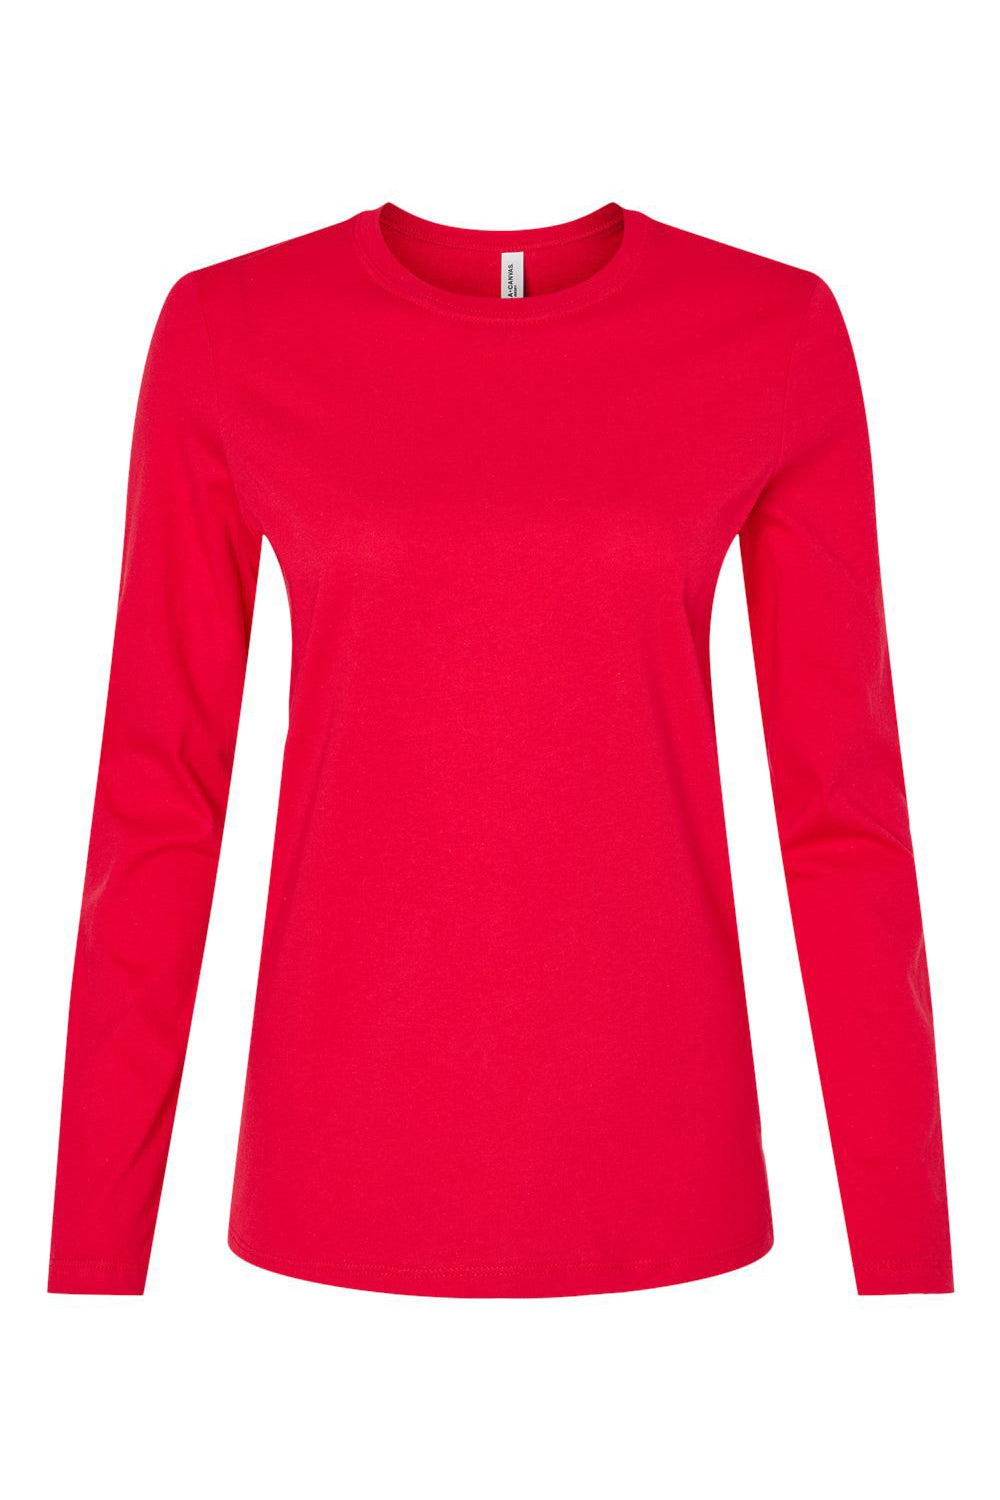 Bella + Canvas B6500/6500 Womens Jersey Long Sleeve Crewneck T-Shirt Red Flat Front